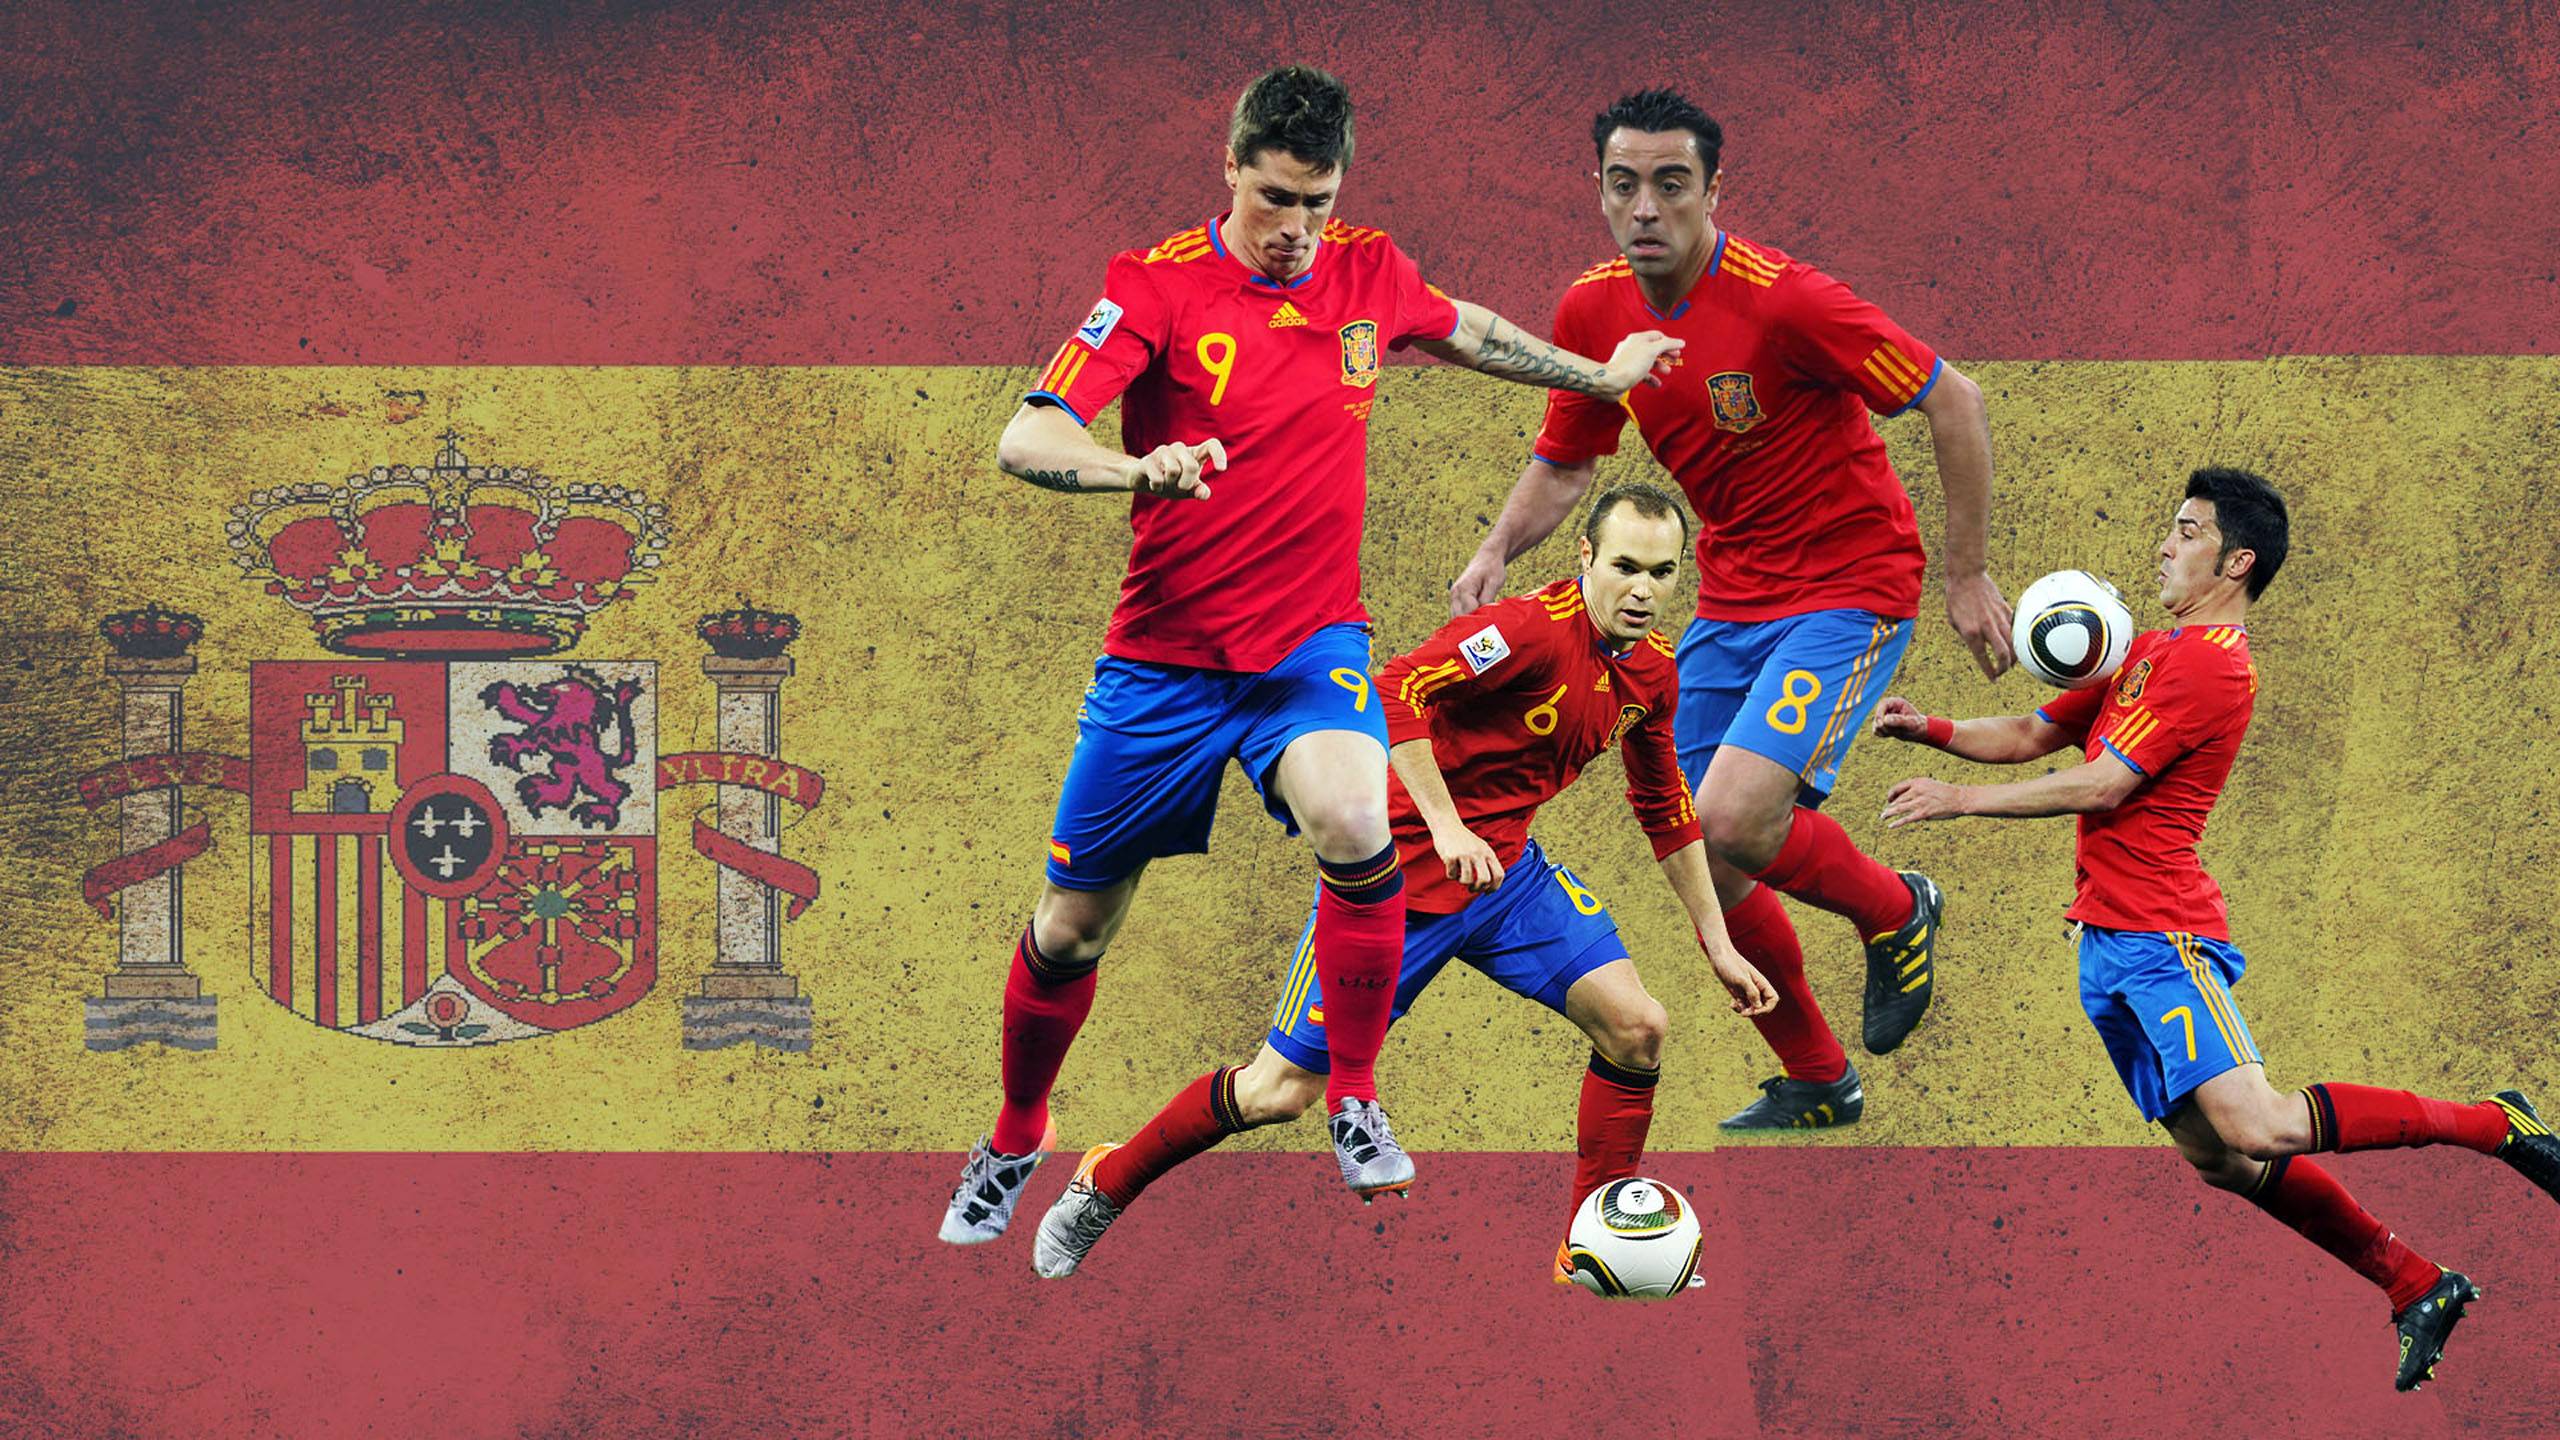 Spain Soccer Team And Flag 2560x1440 wallpaper